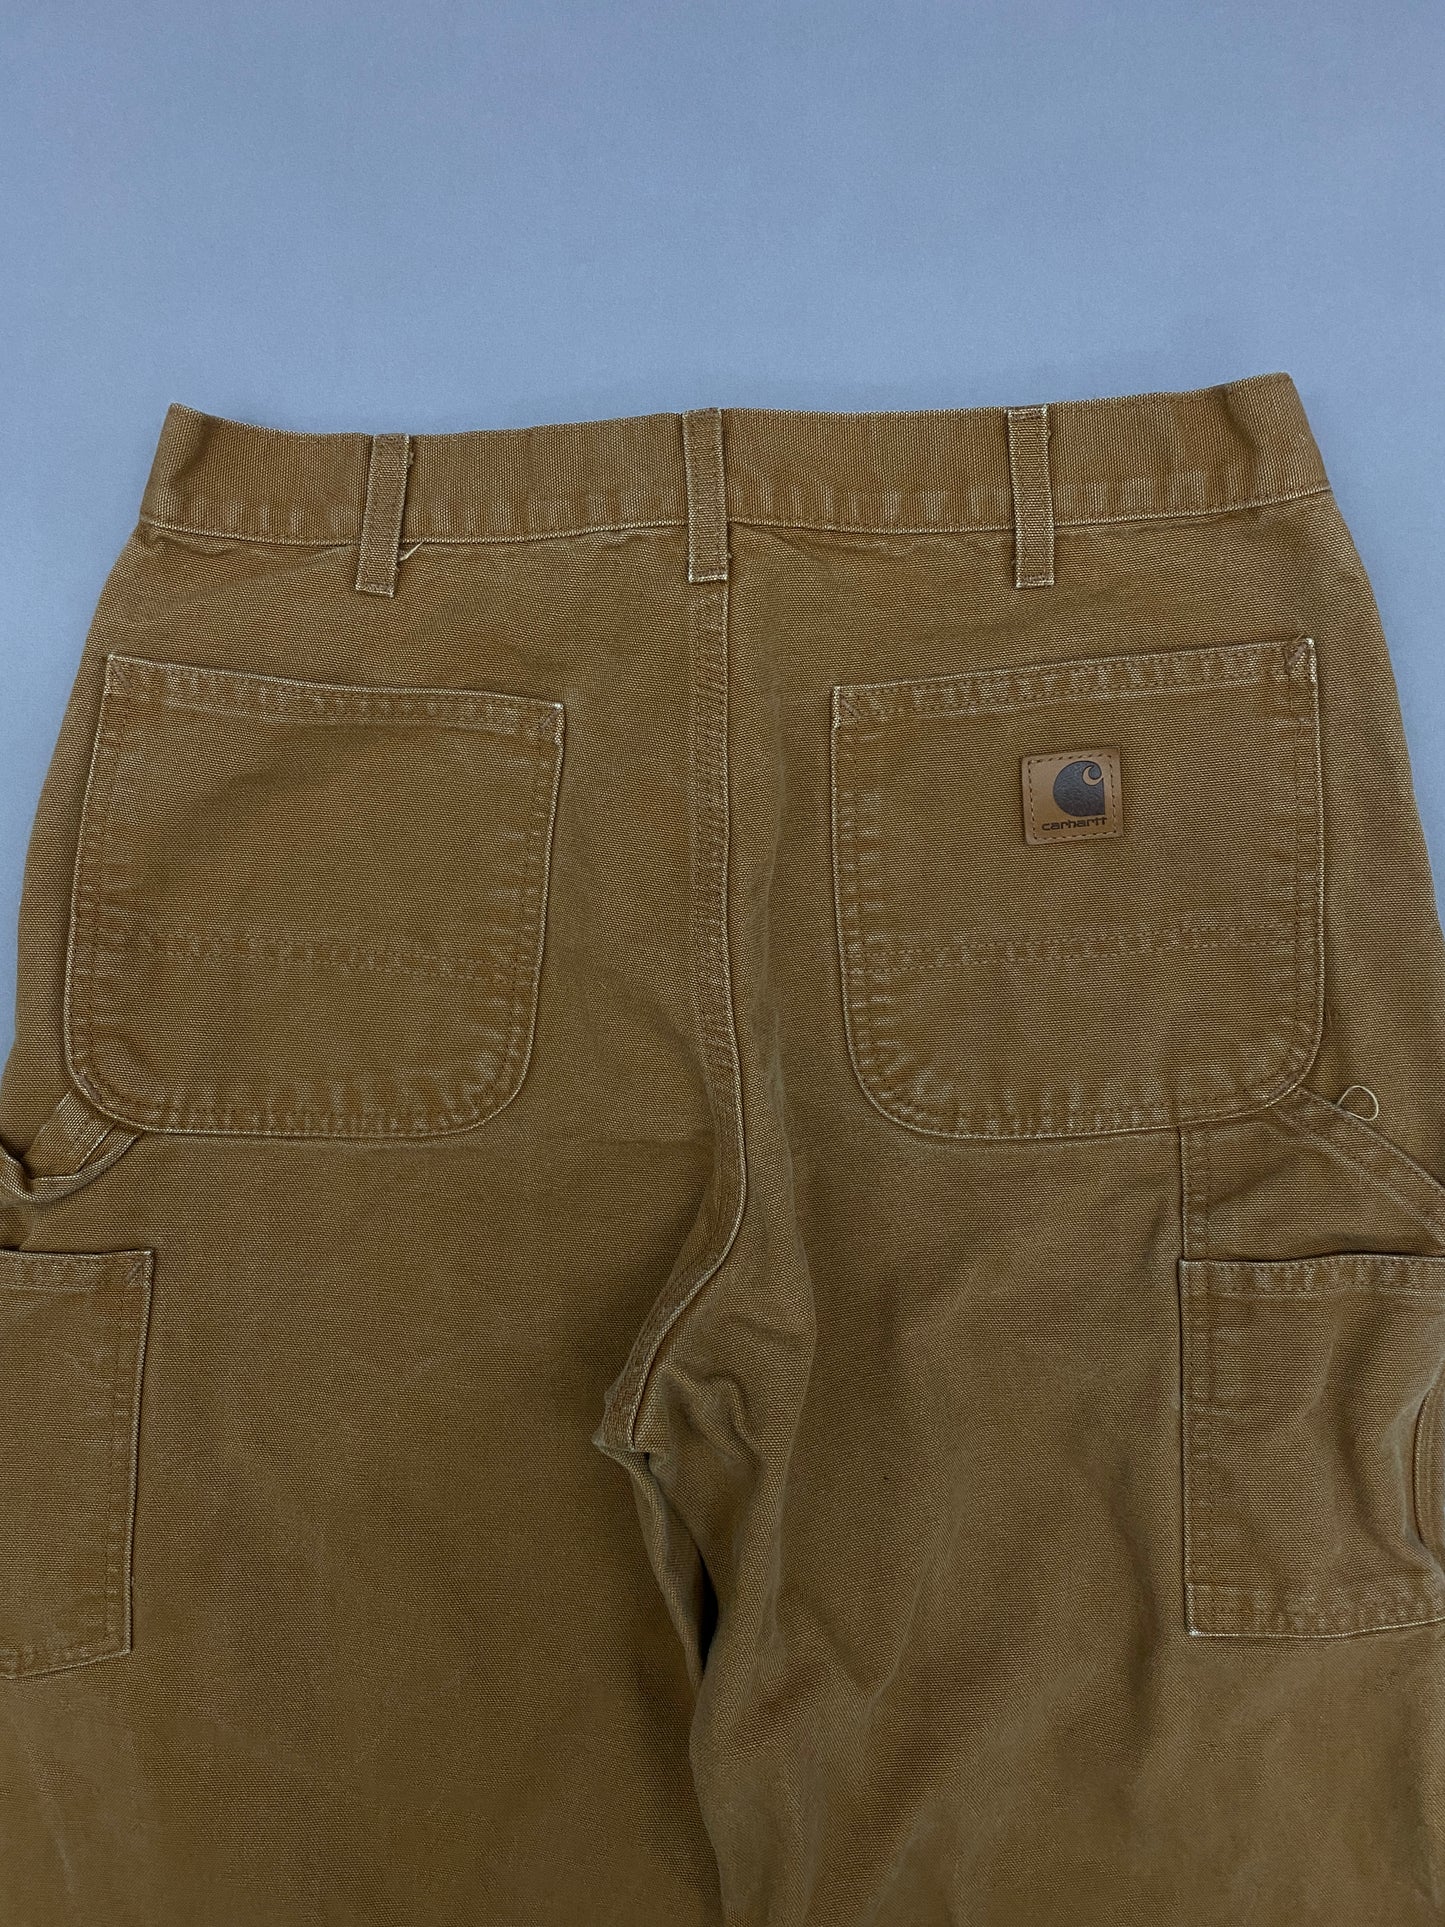 Carhartt Carpenter Vintage Pants - 34 x 32